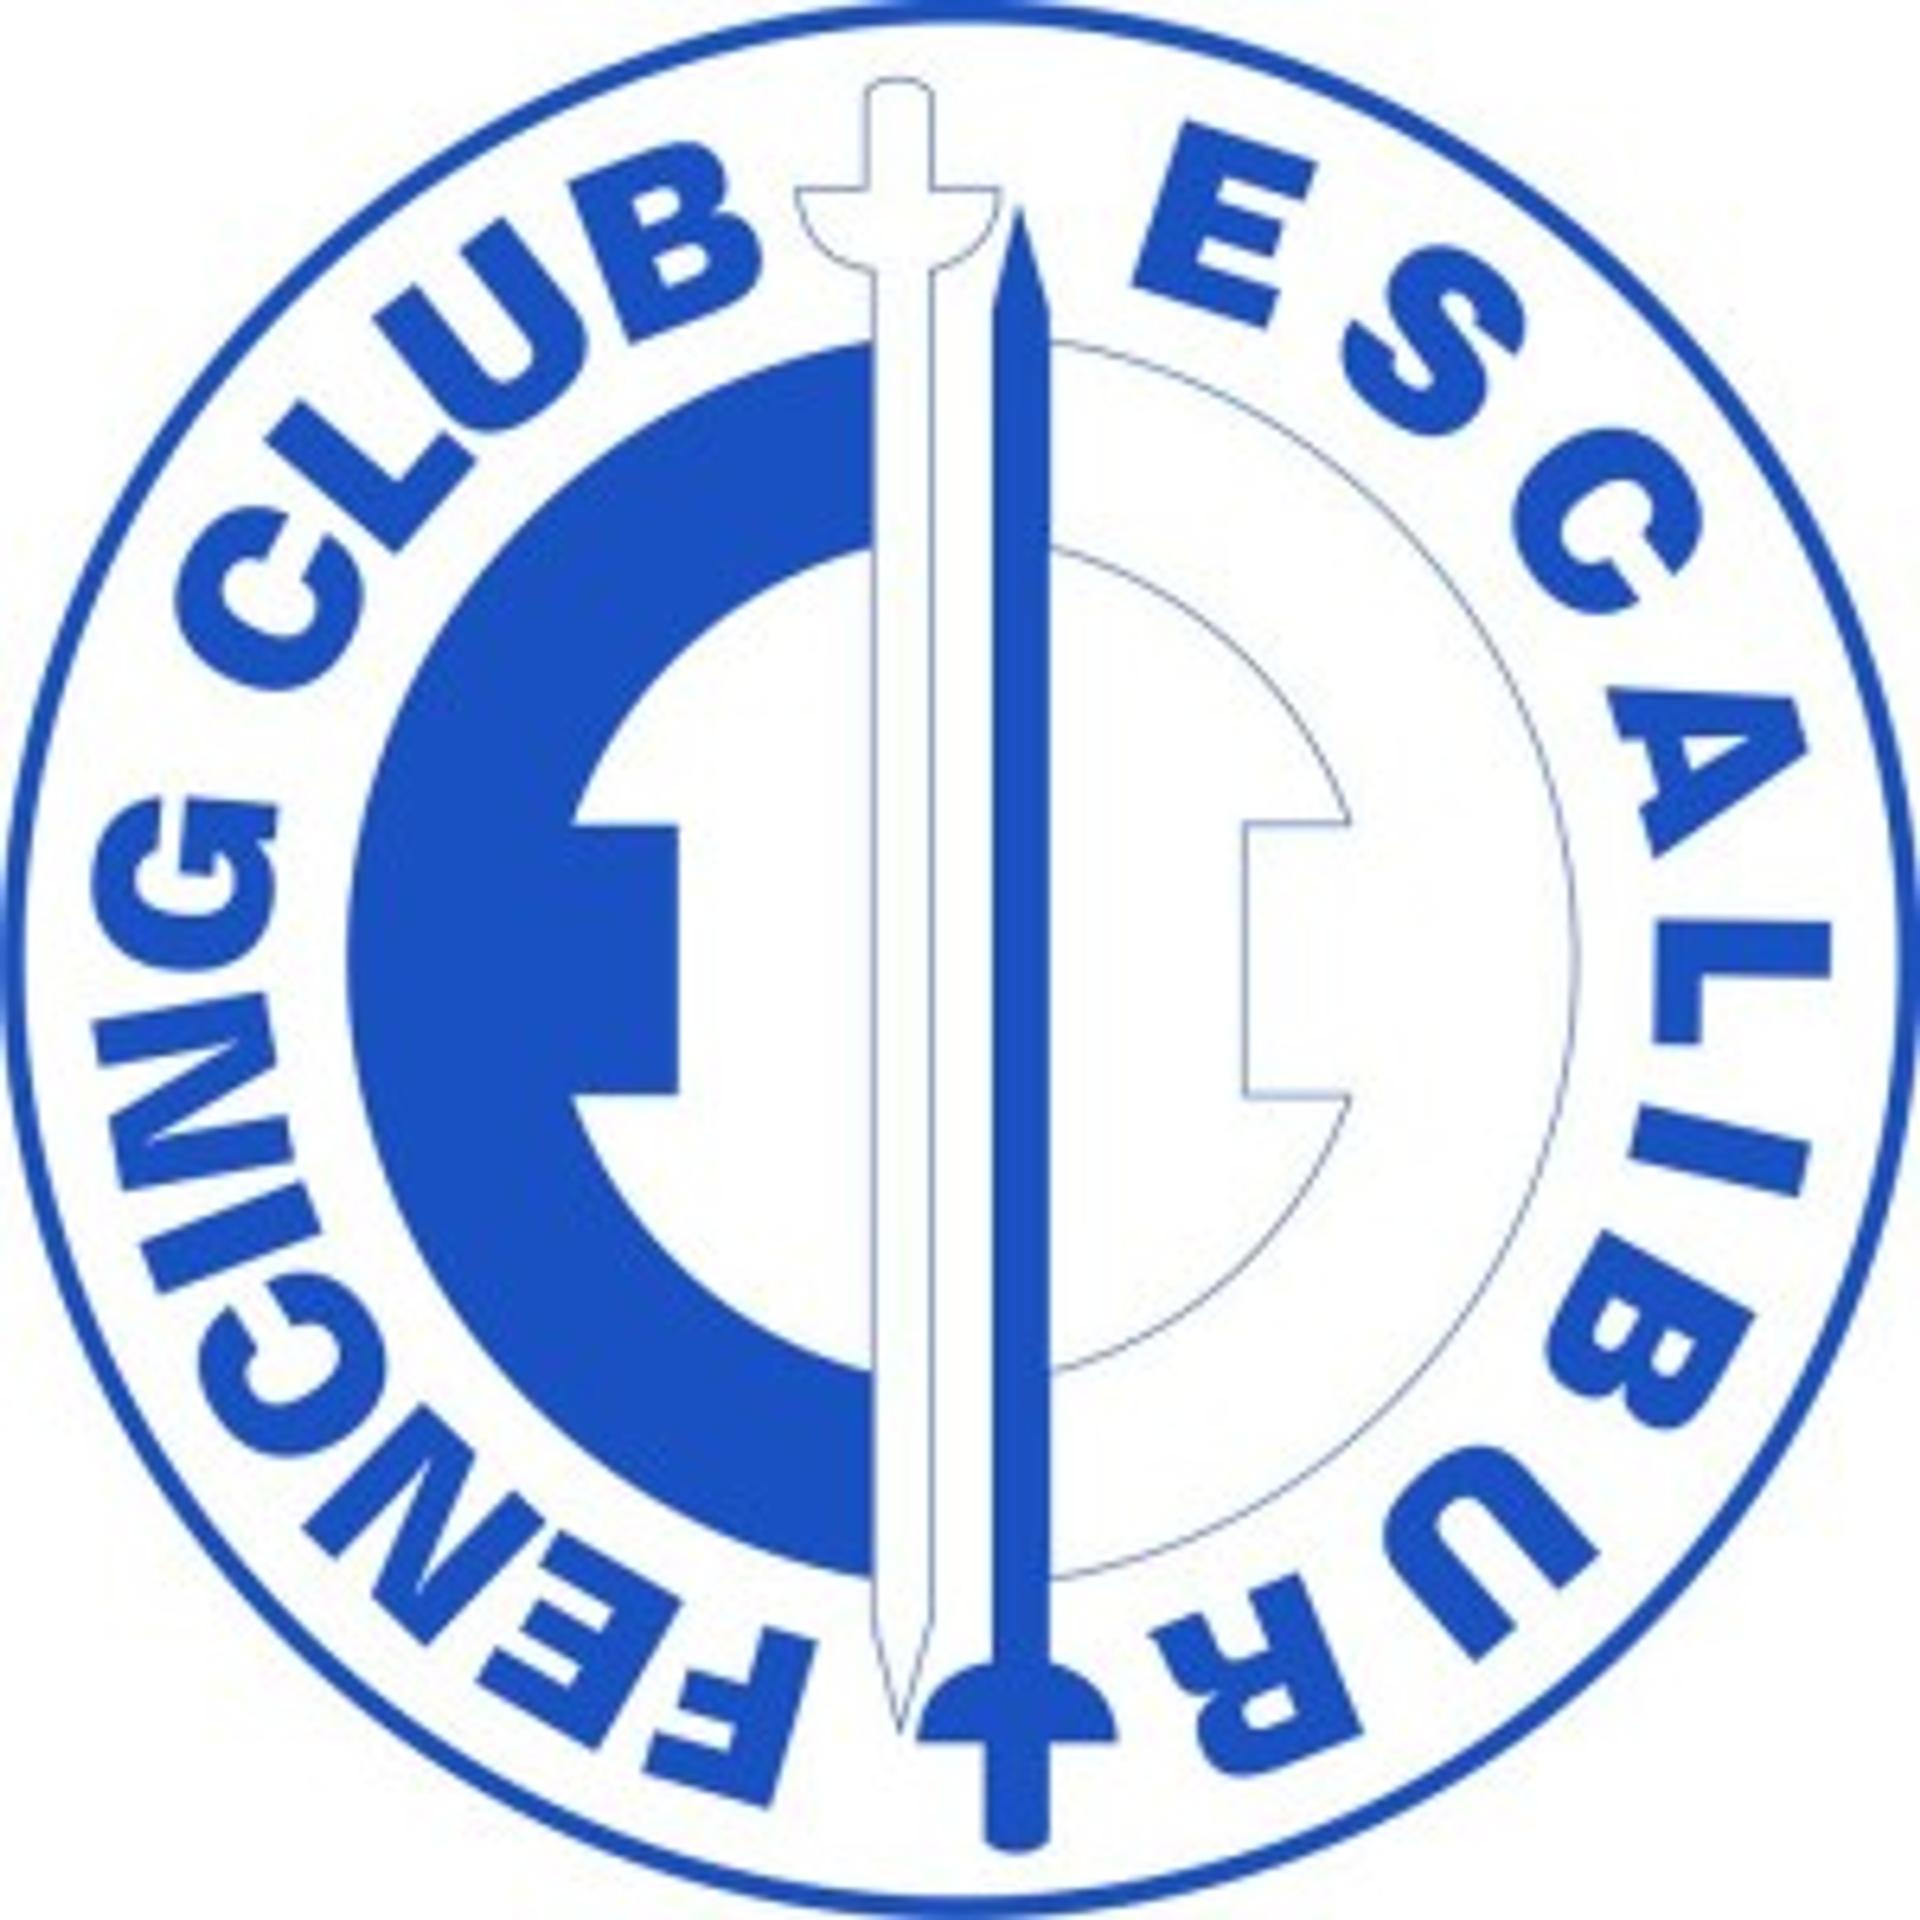 escalibur logo